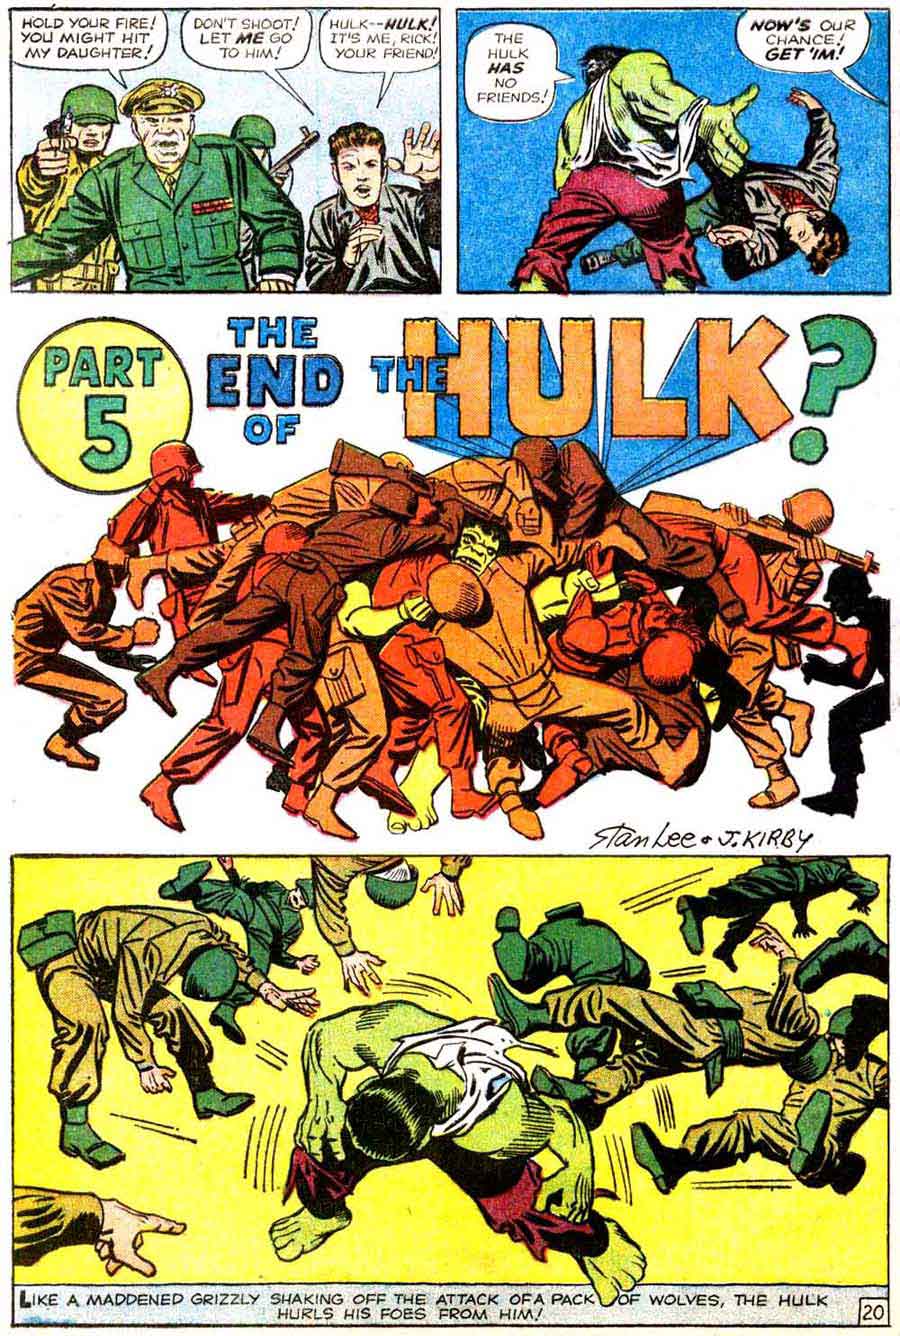 Incredible Hulk v1 #2 marvel comic book page art by Jack Kirby & Steve Ditko